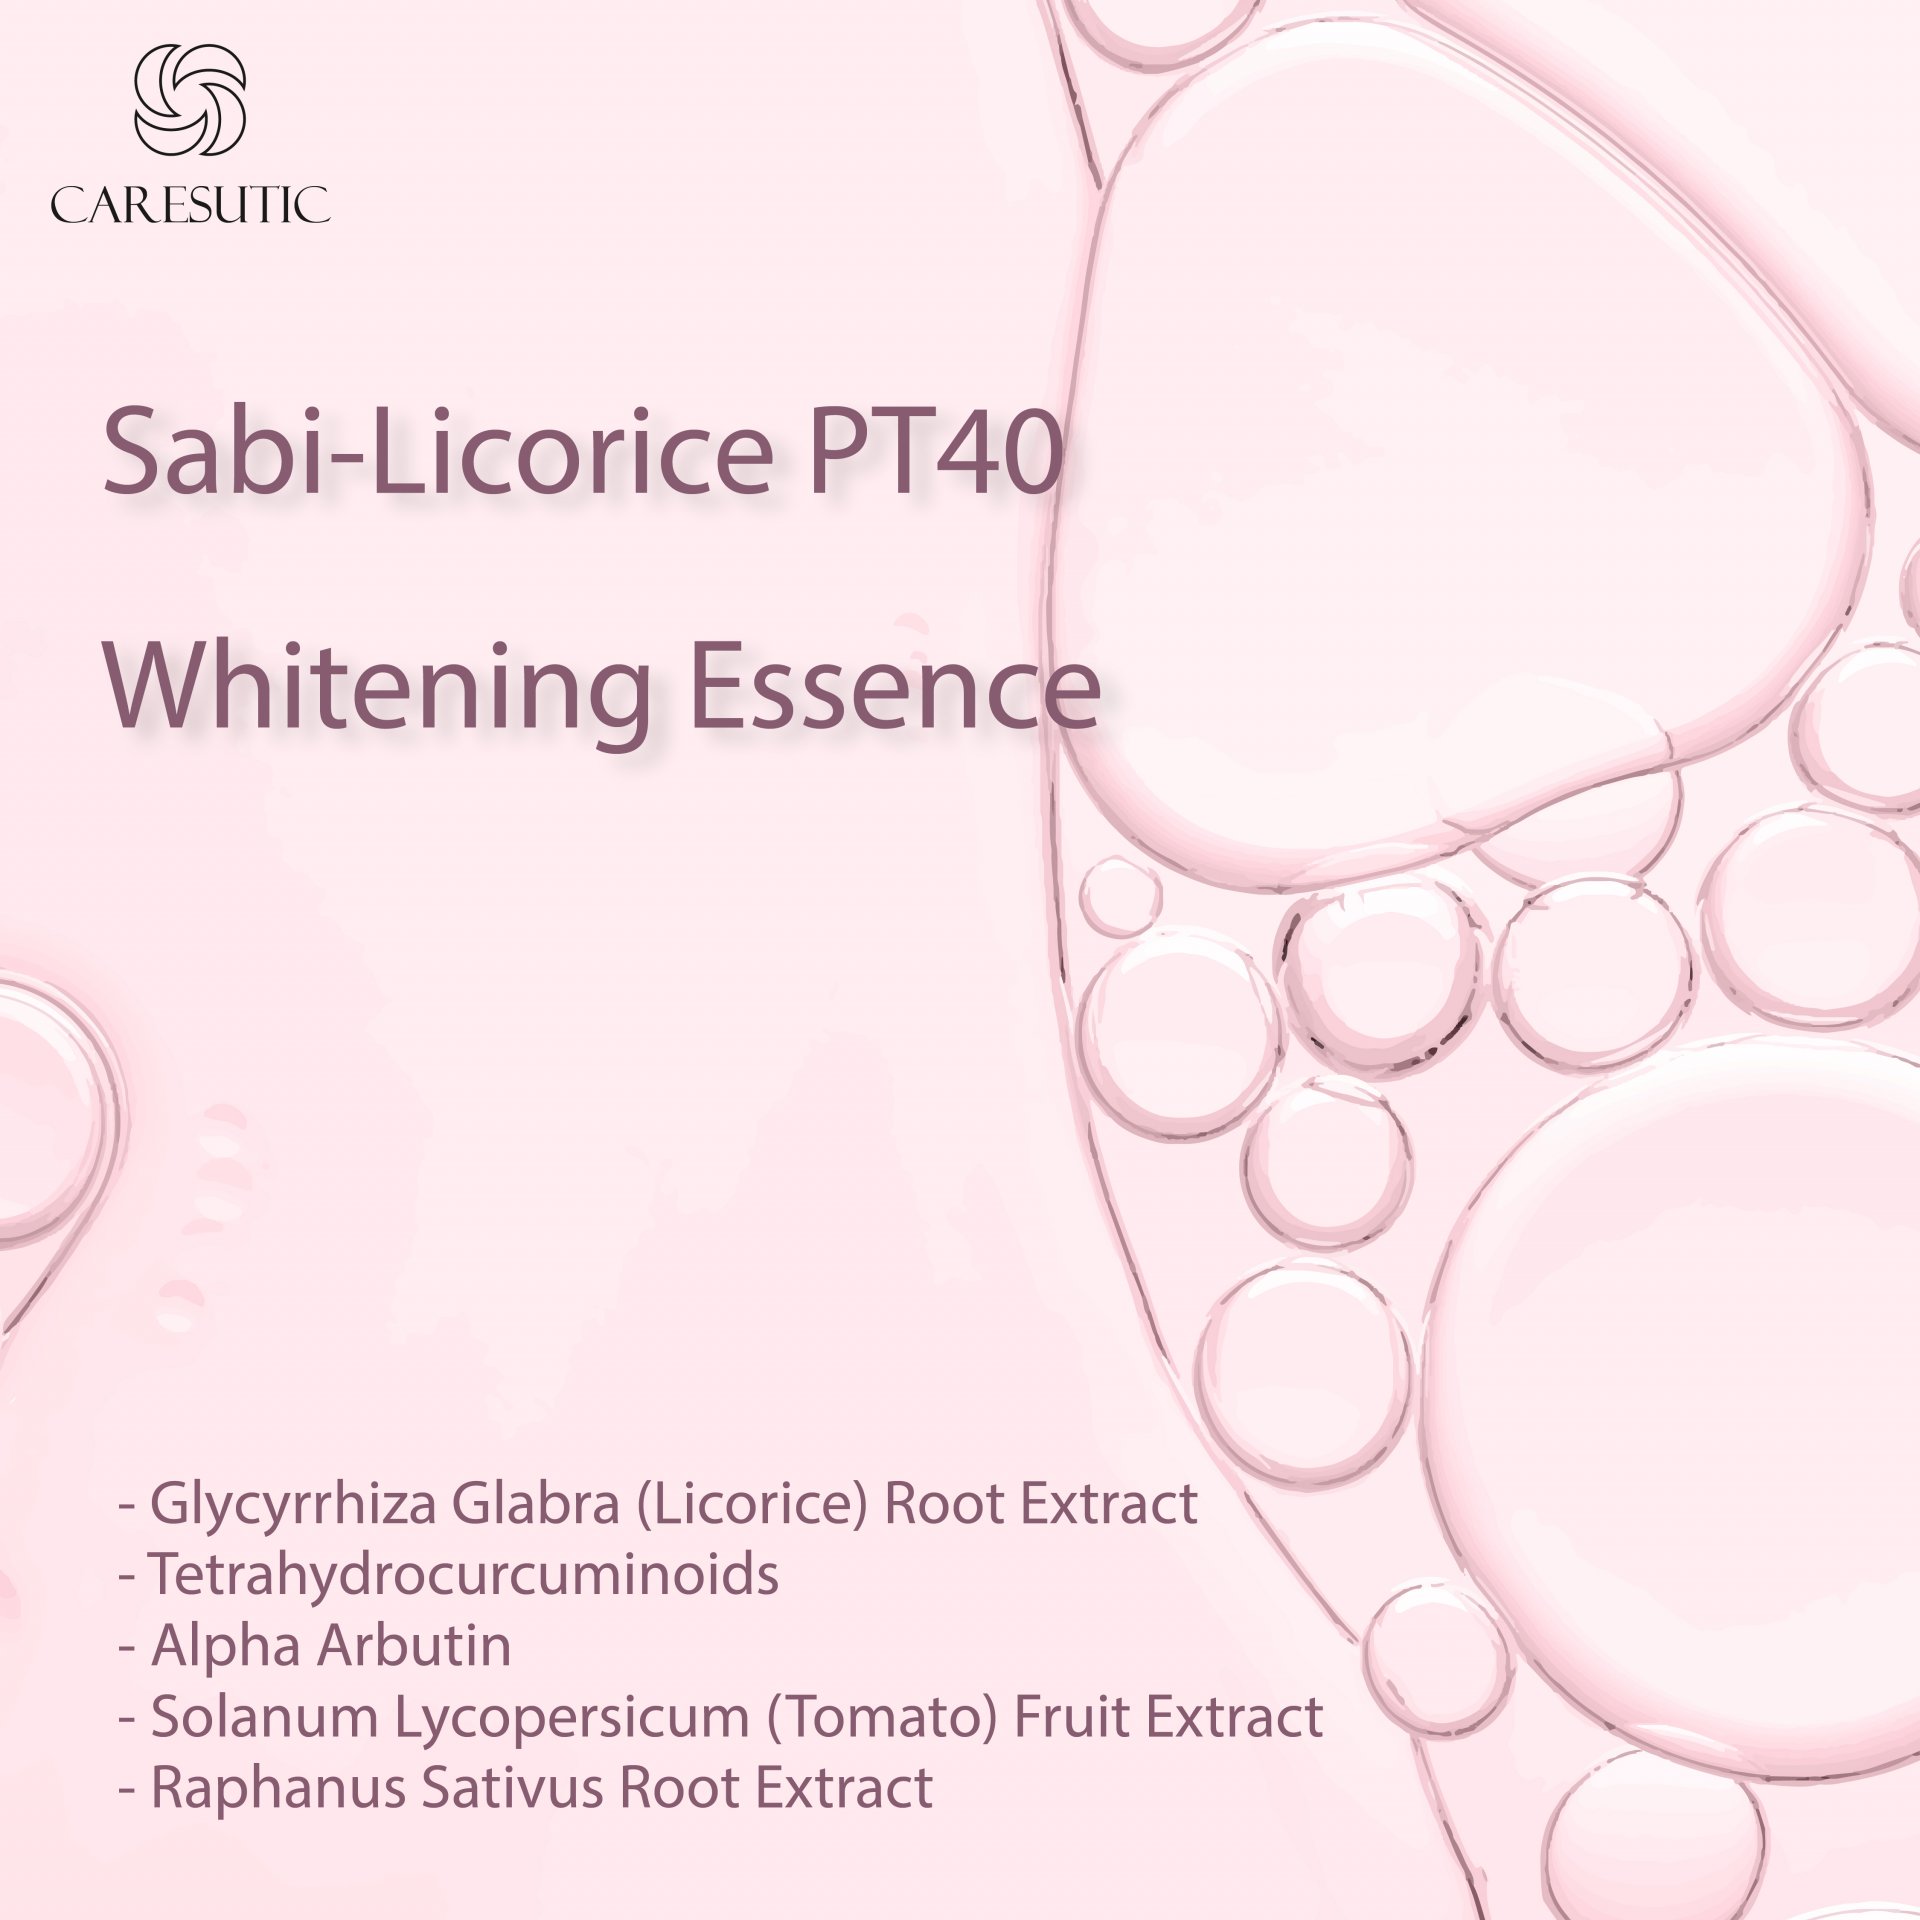 Sabi-Licorice PT40 Whitening Essence